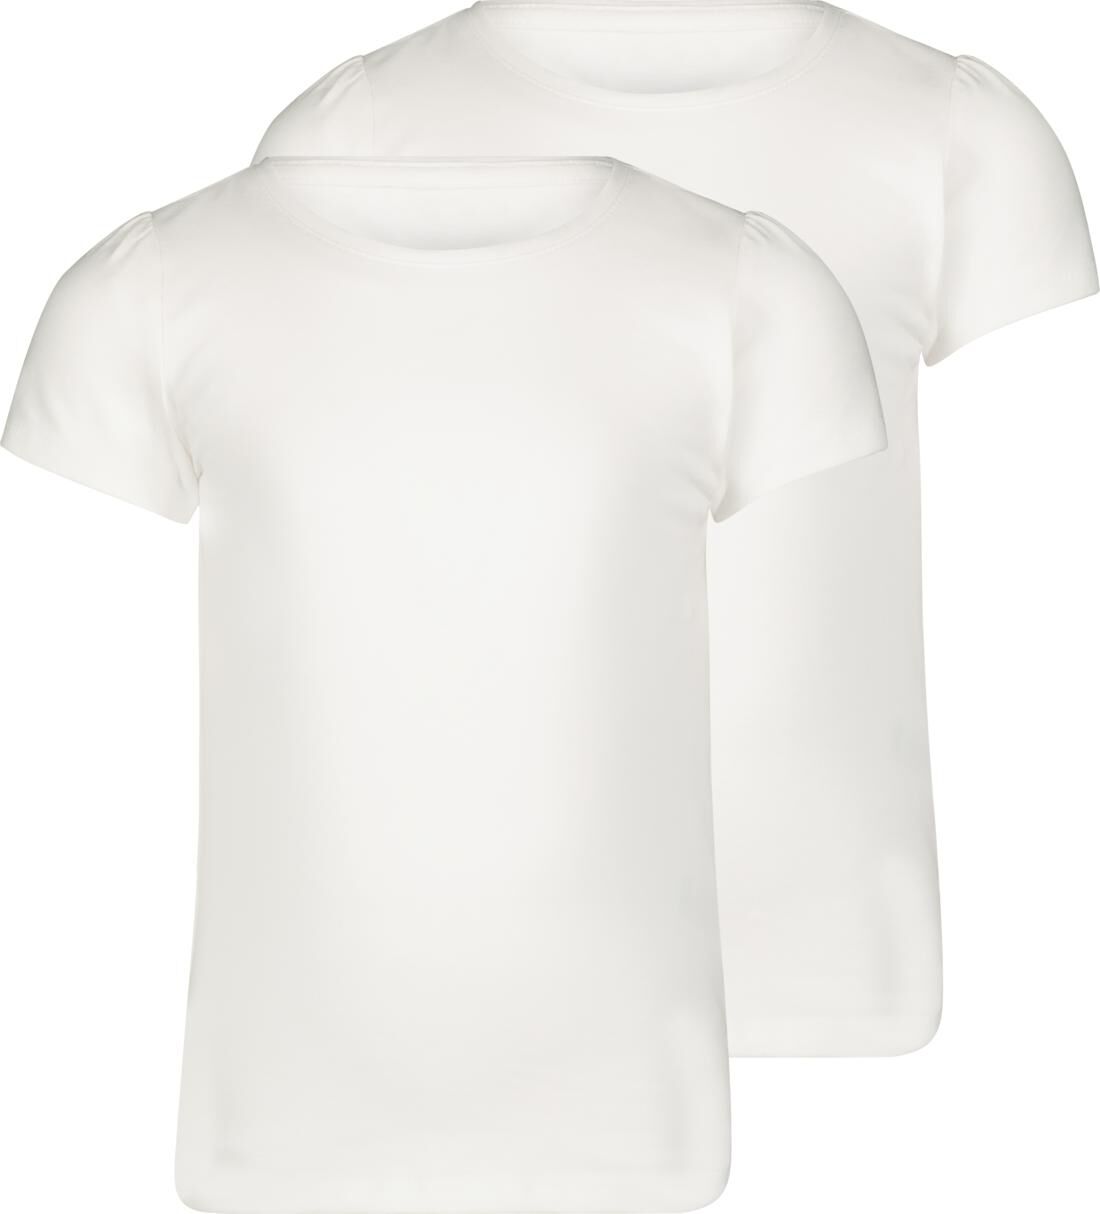 HEMA Kinder T-shirts - 2 Stuks Wit (wit)